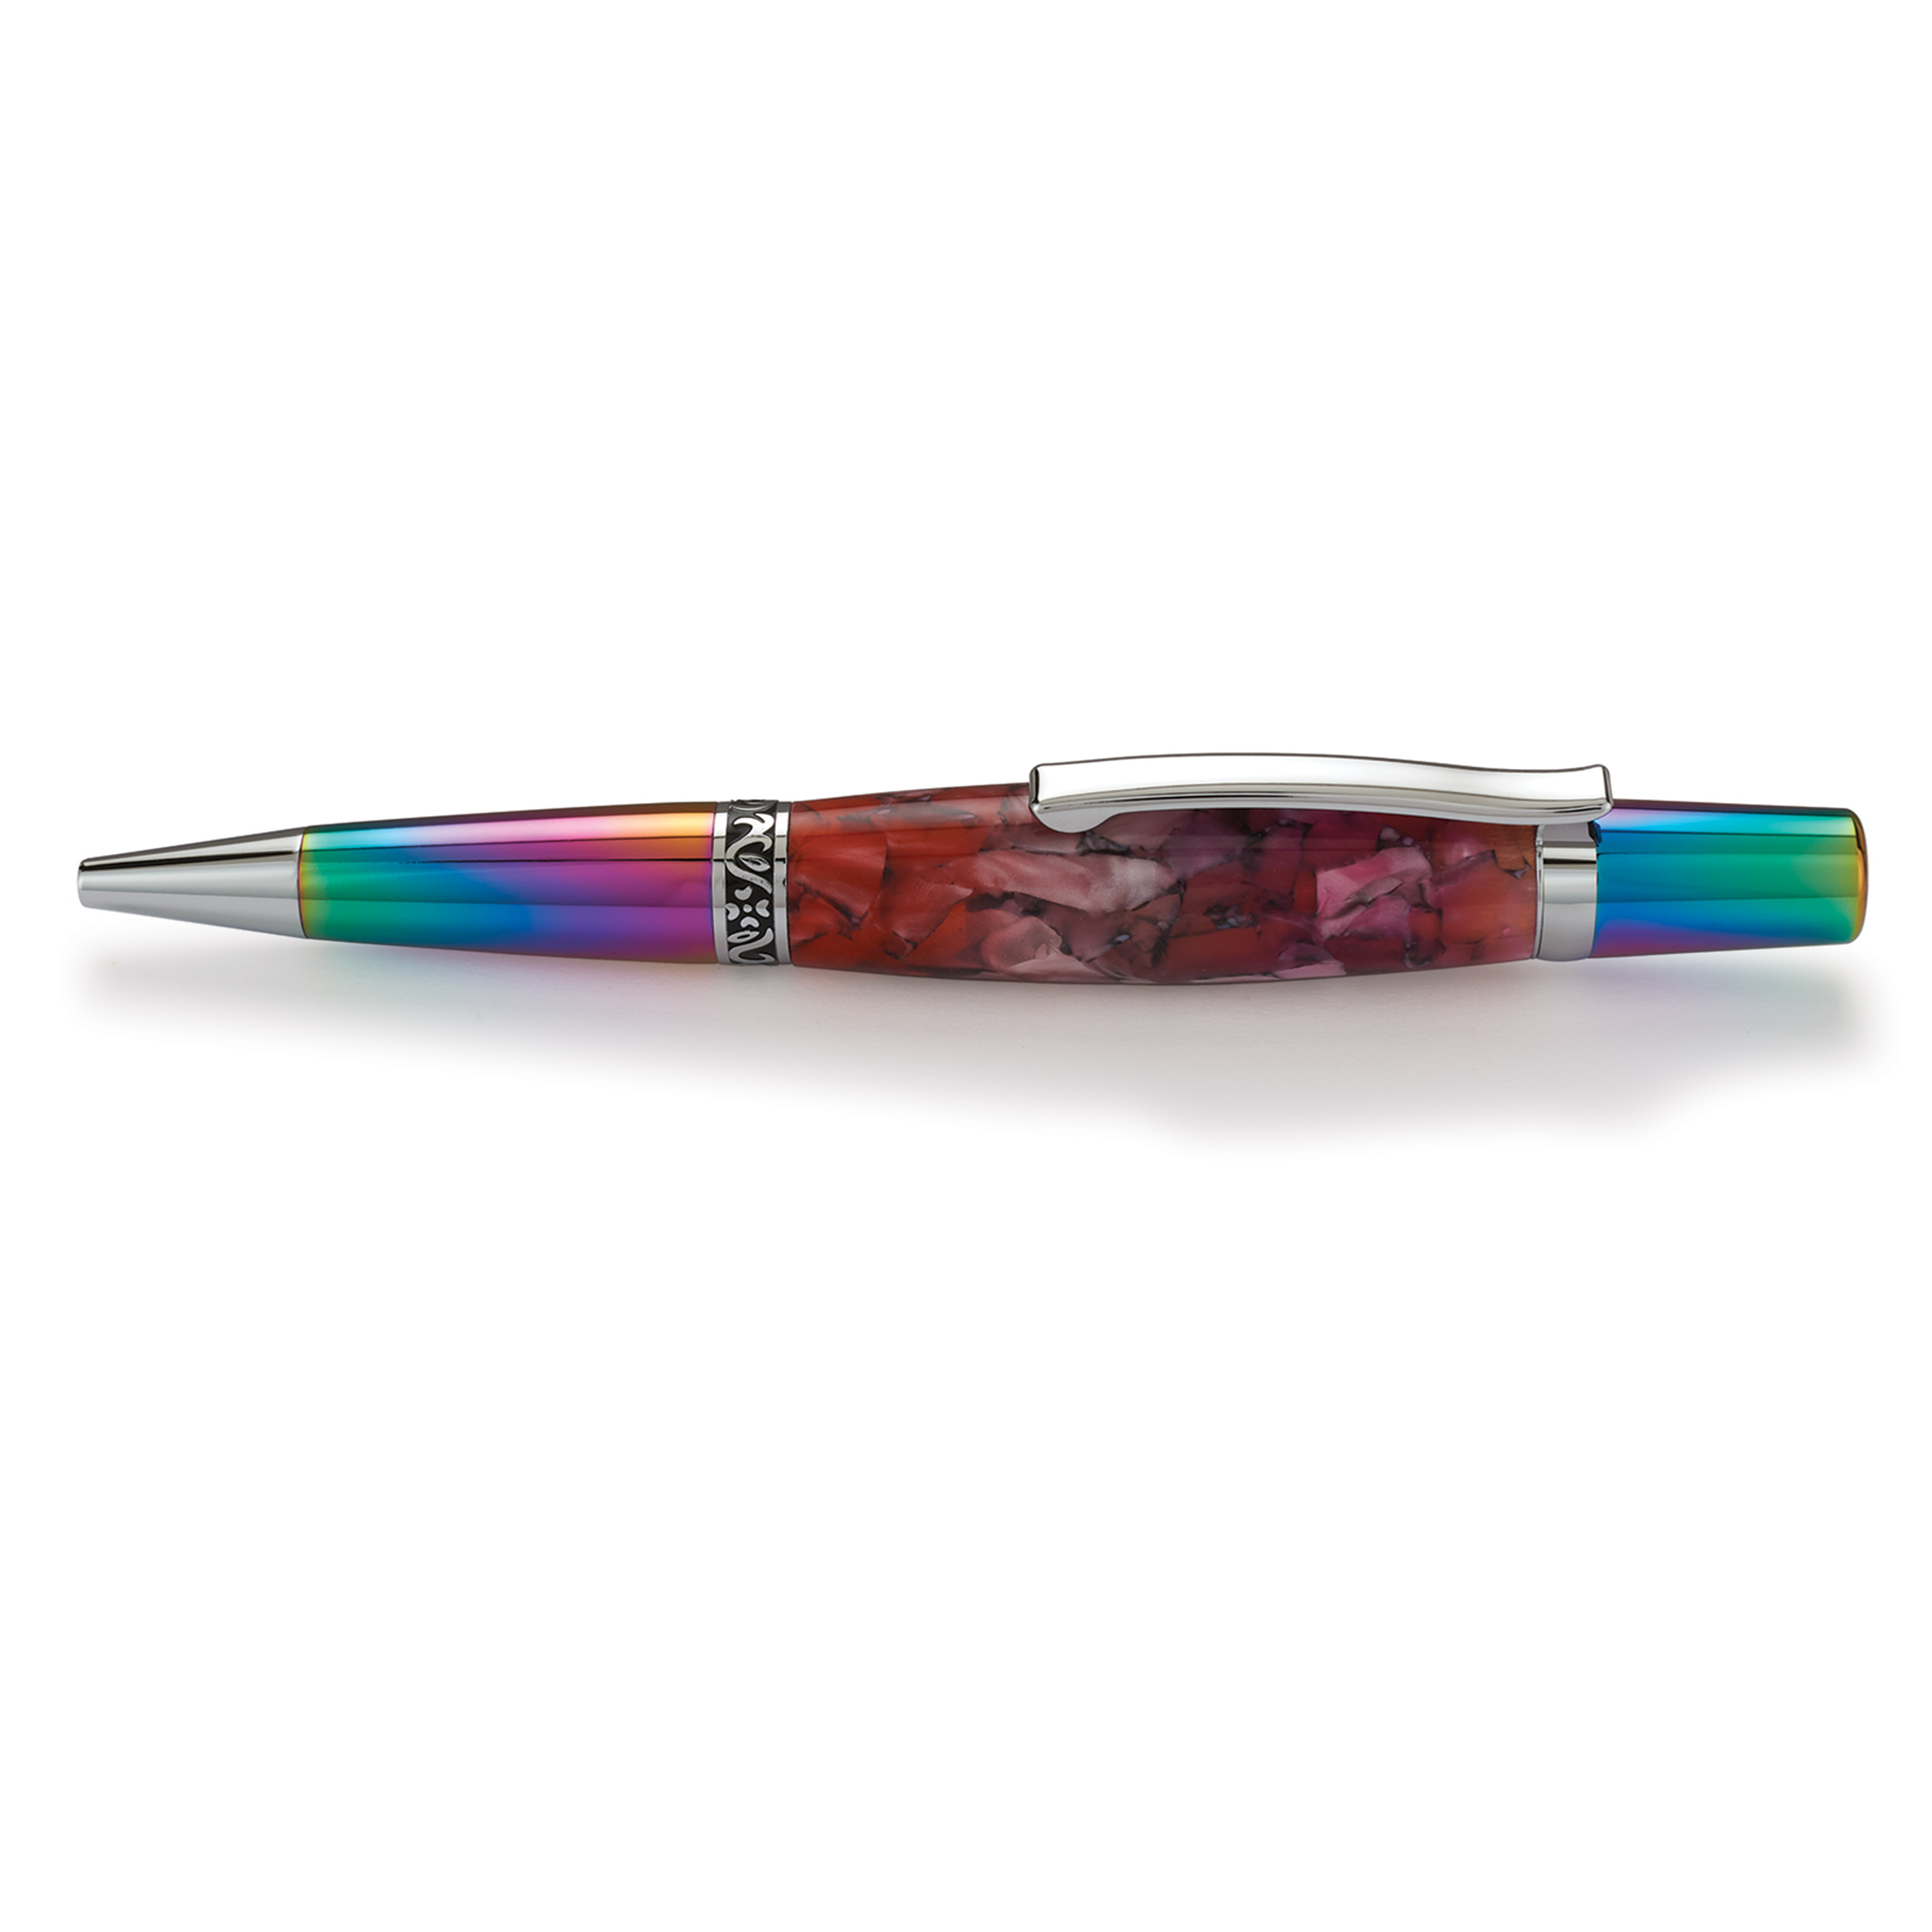 Wall Street Ii Elegant Ballpoint Pen Kit - Titanium Spectrum And Chrome